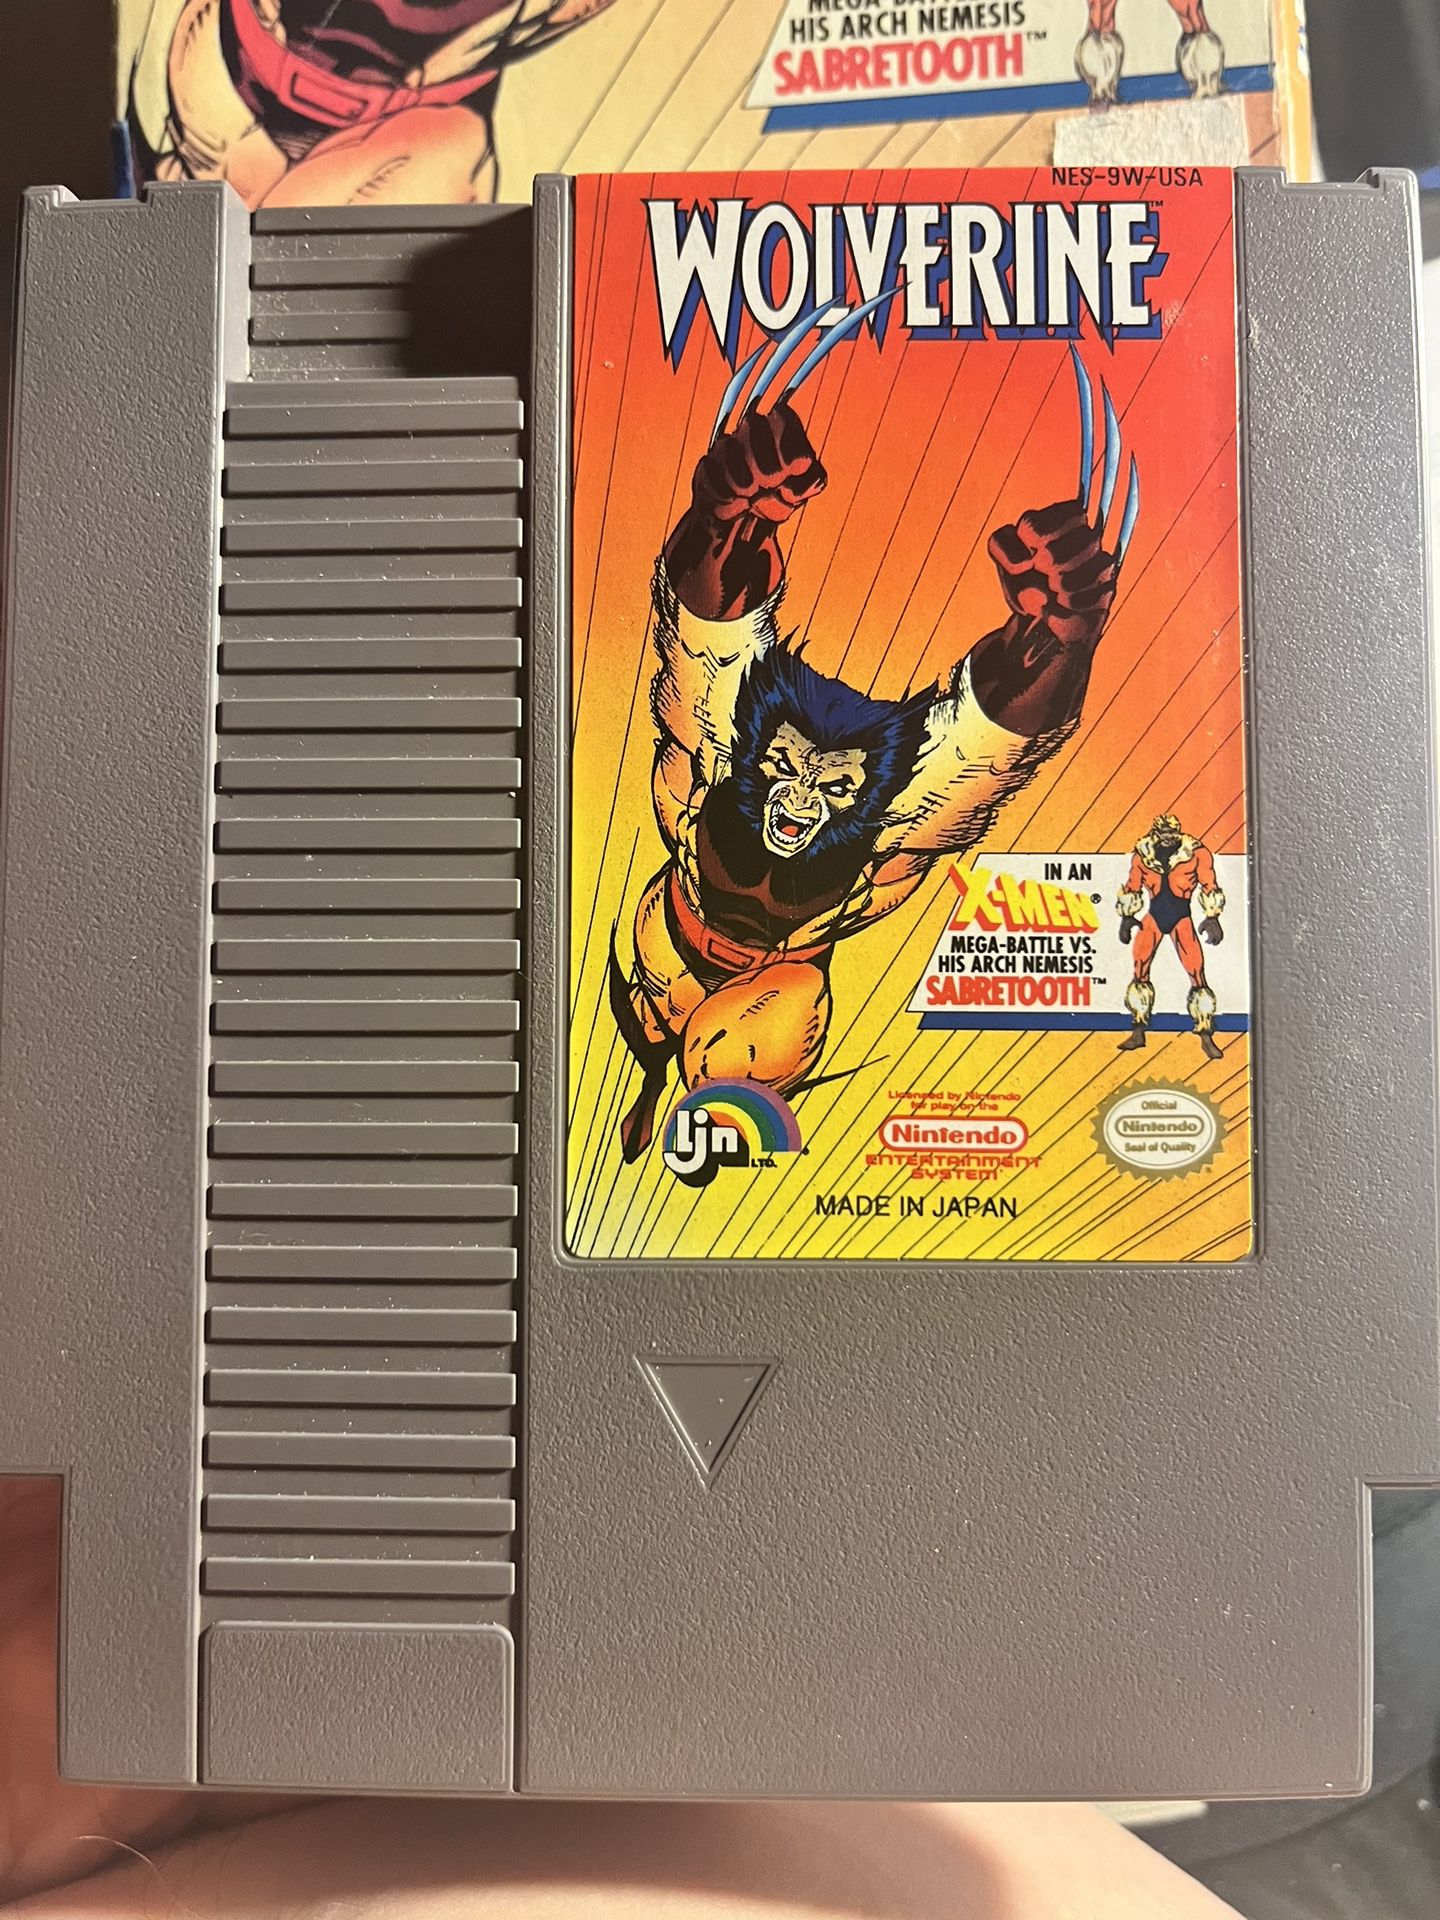 Wolverine Nintendo Game W Box 